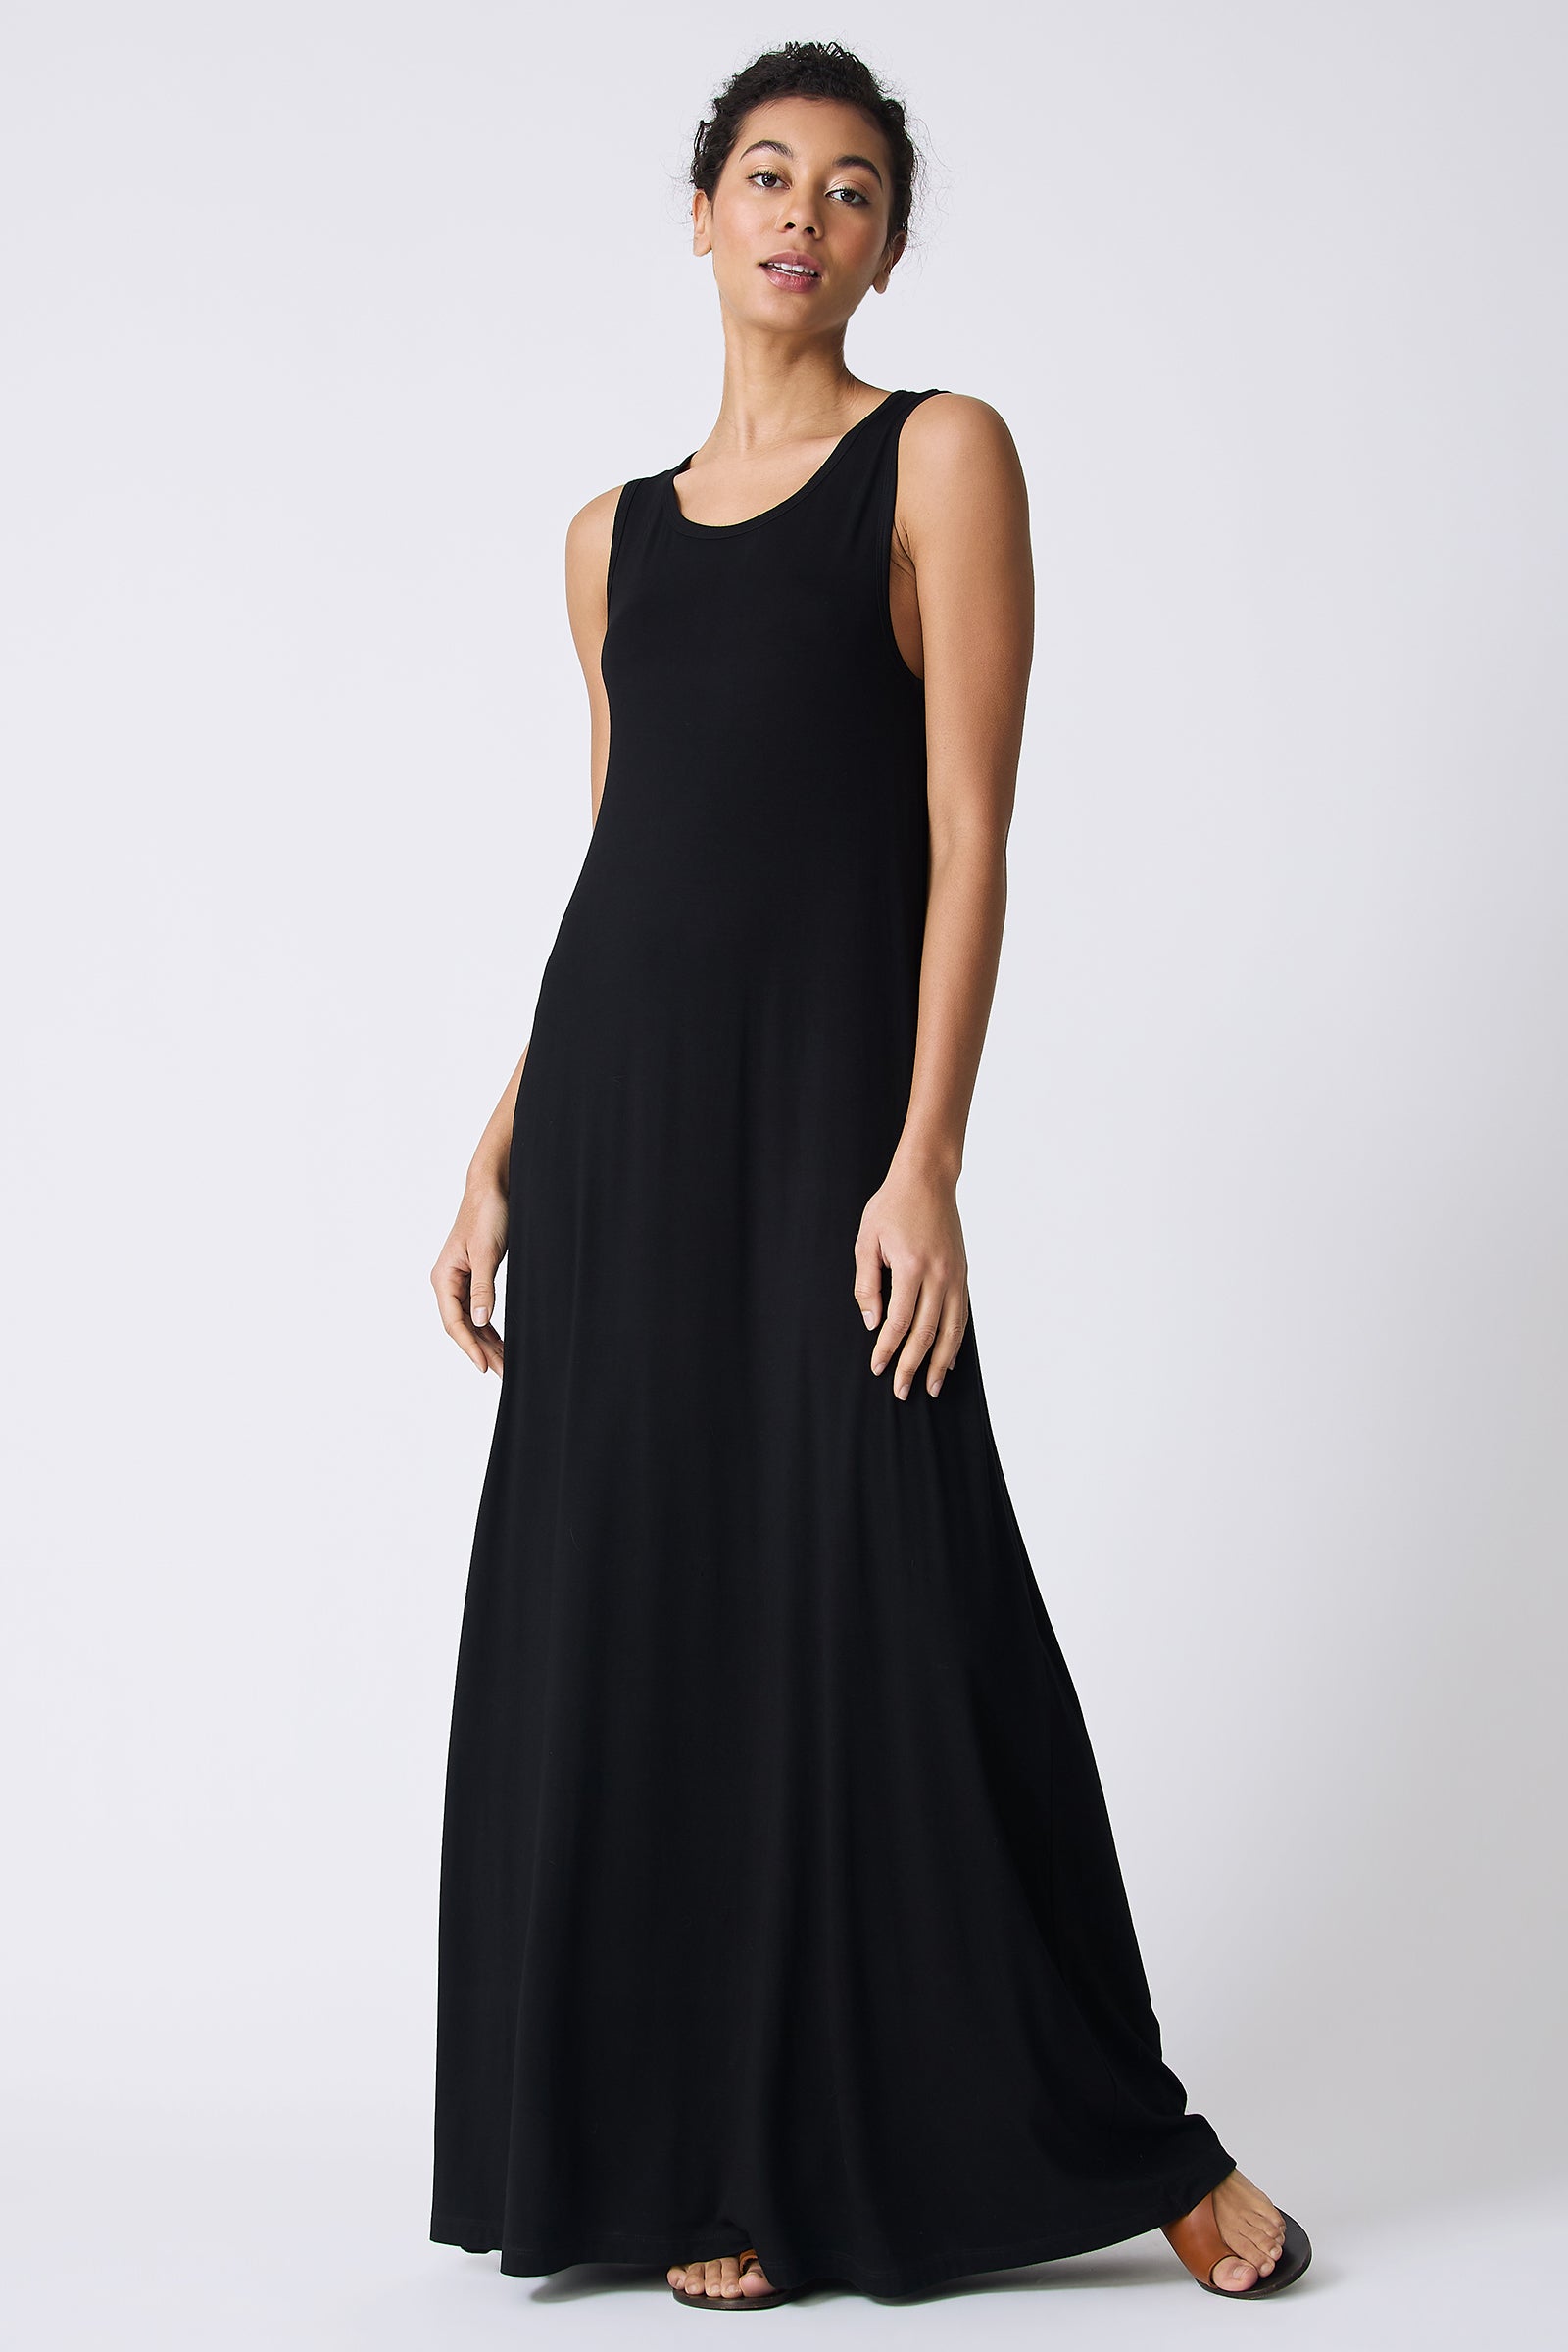 Kal Rieman Sophia Maxi Dress in Black on model full front view